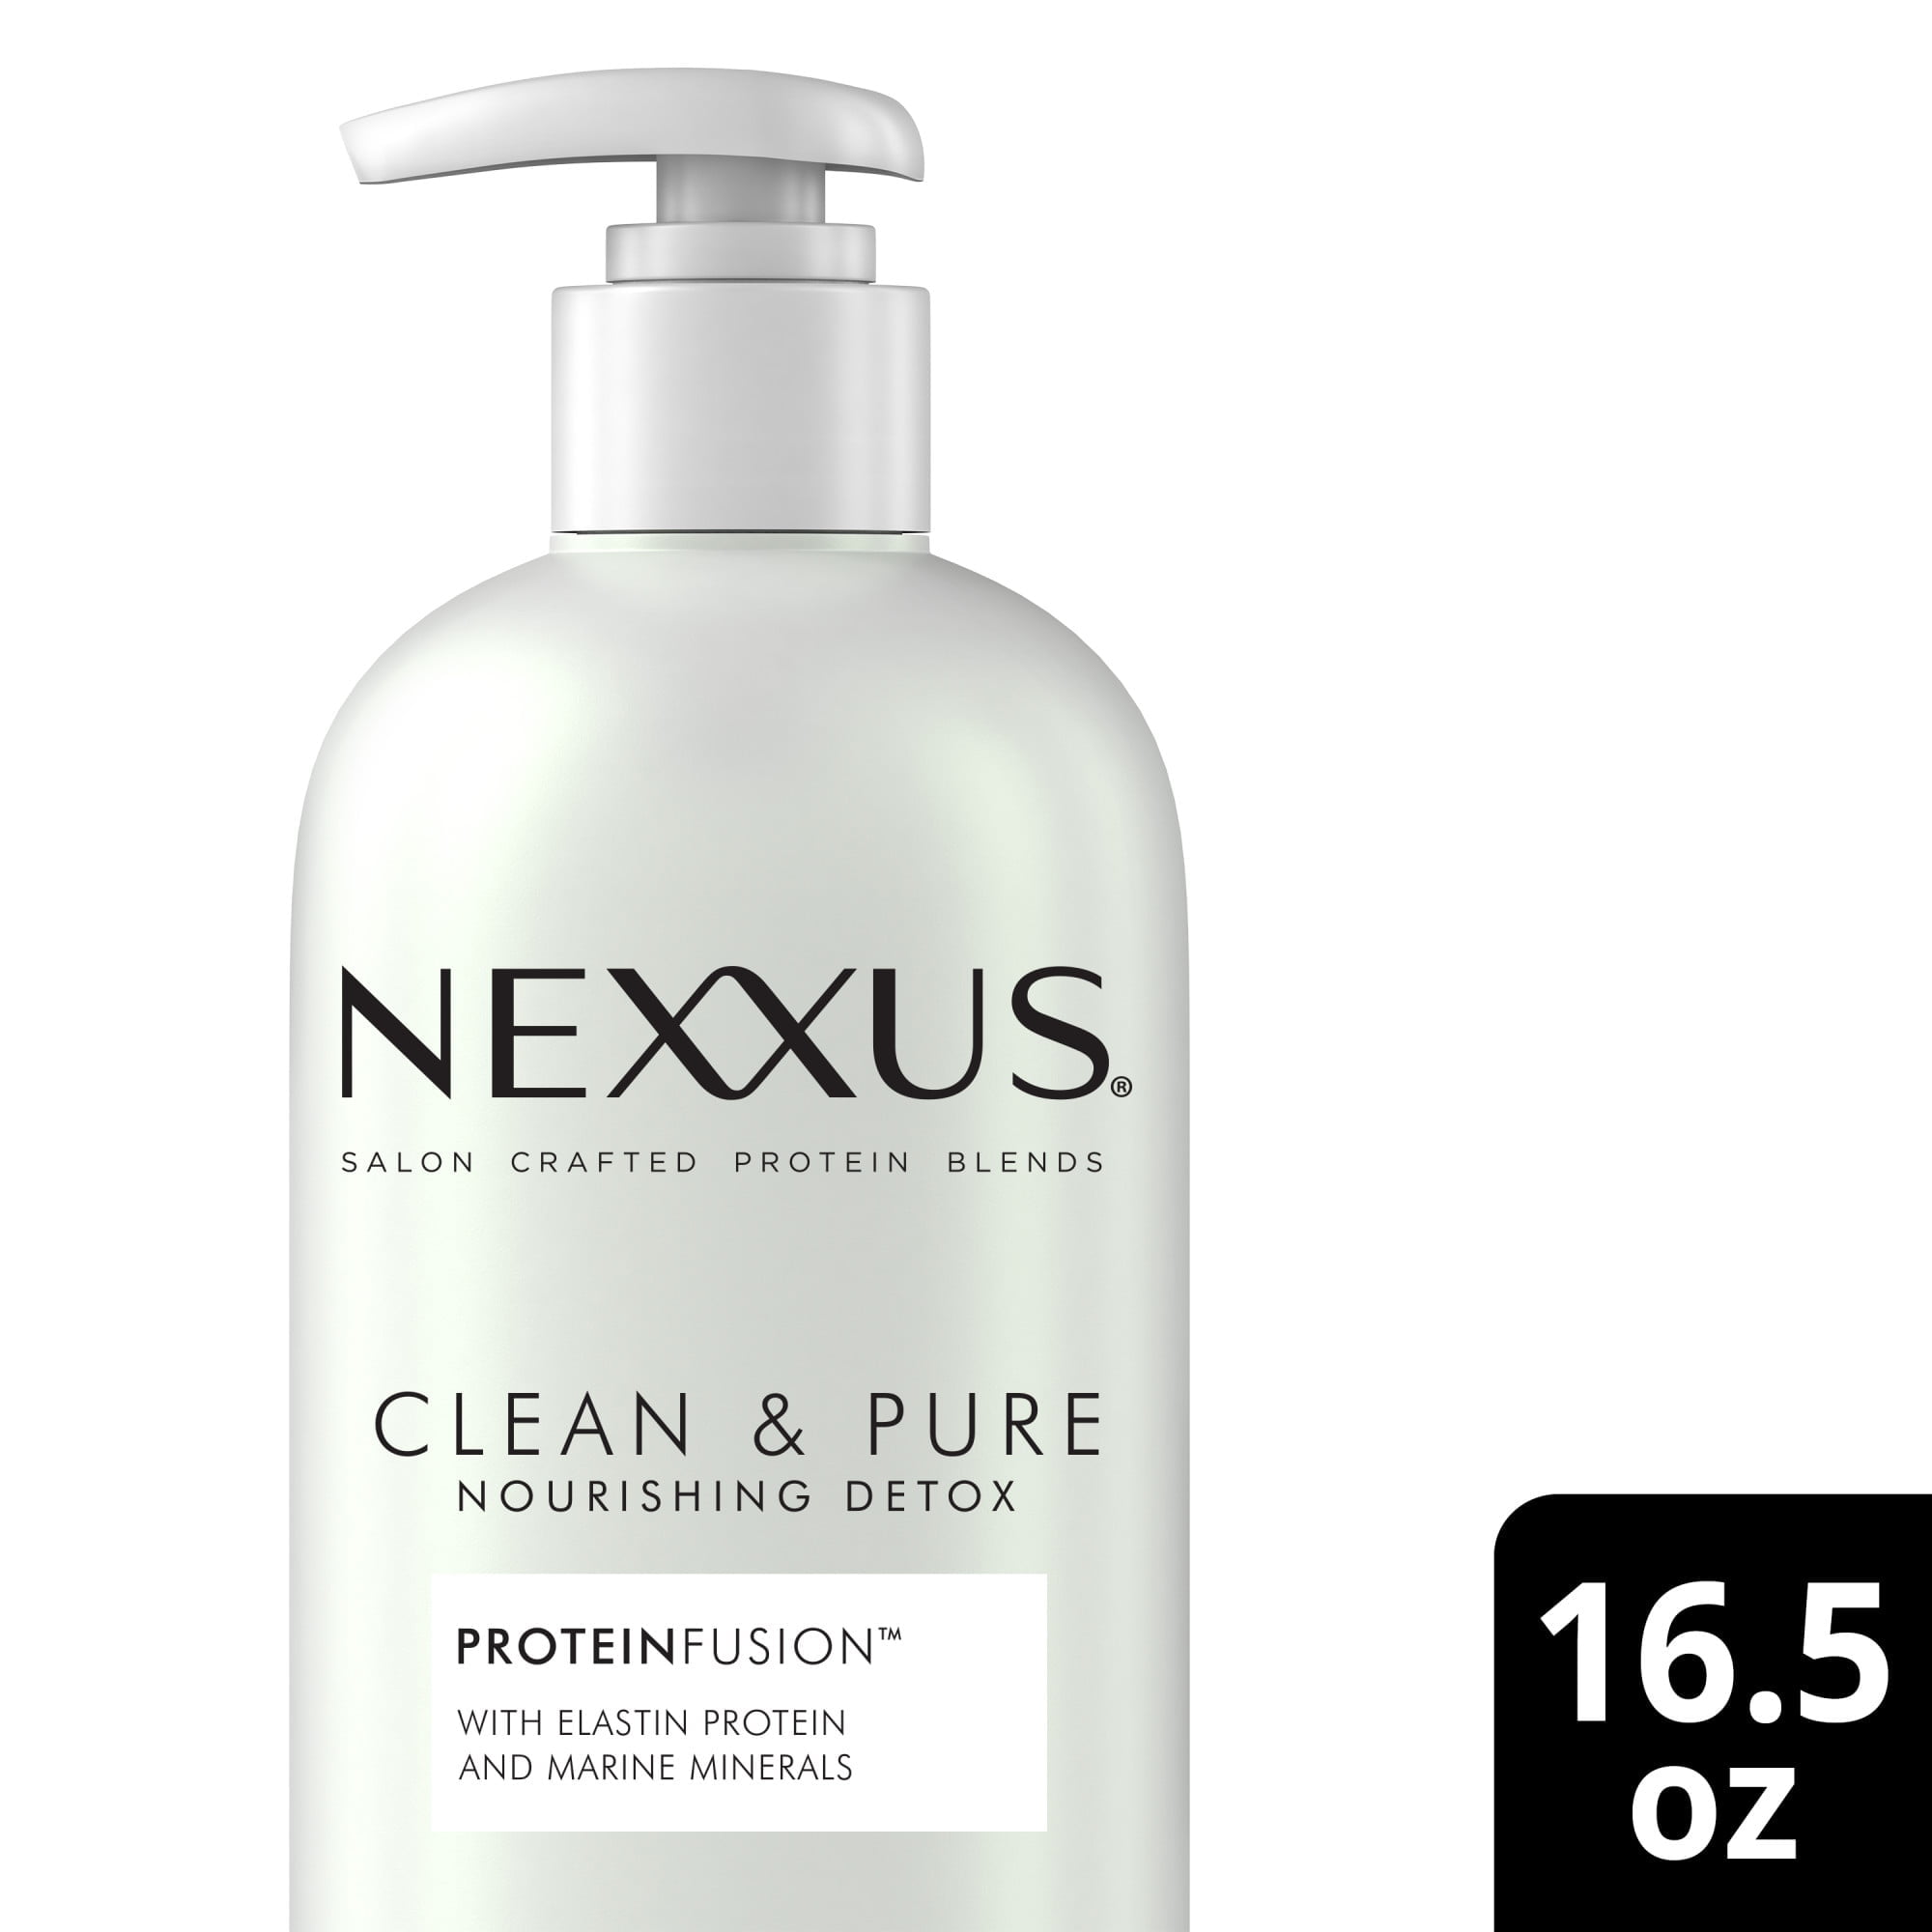 Nexxus Ultralight Smooth Daily Shampoo with Almond Protein, White Jasmine  Flower, 16.5 fl oz